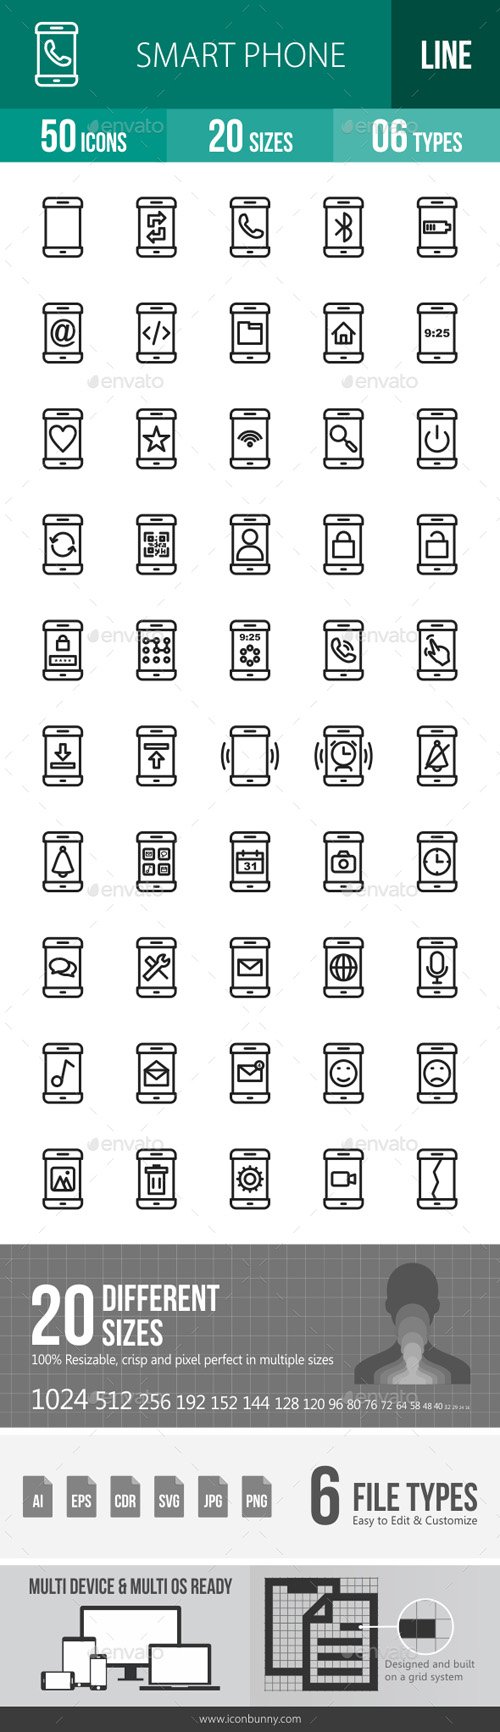 Smartphone Line Icons 17953438